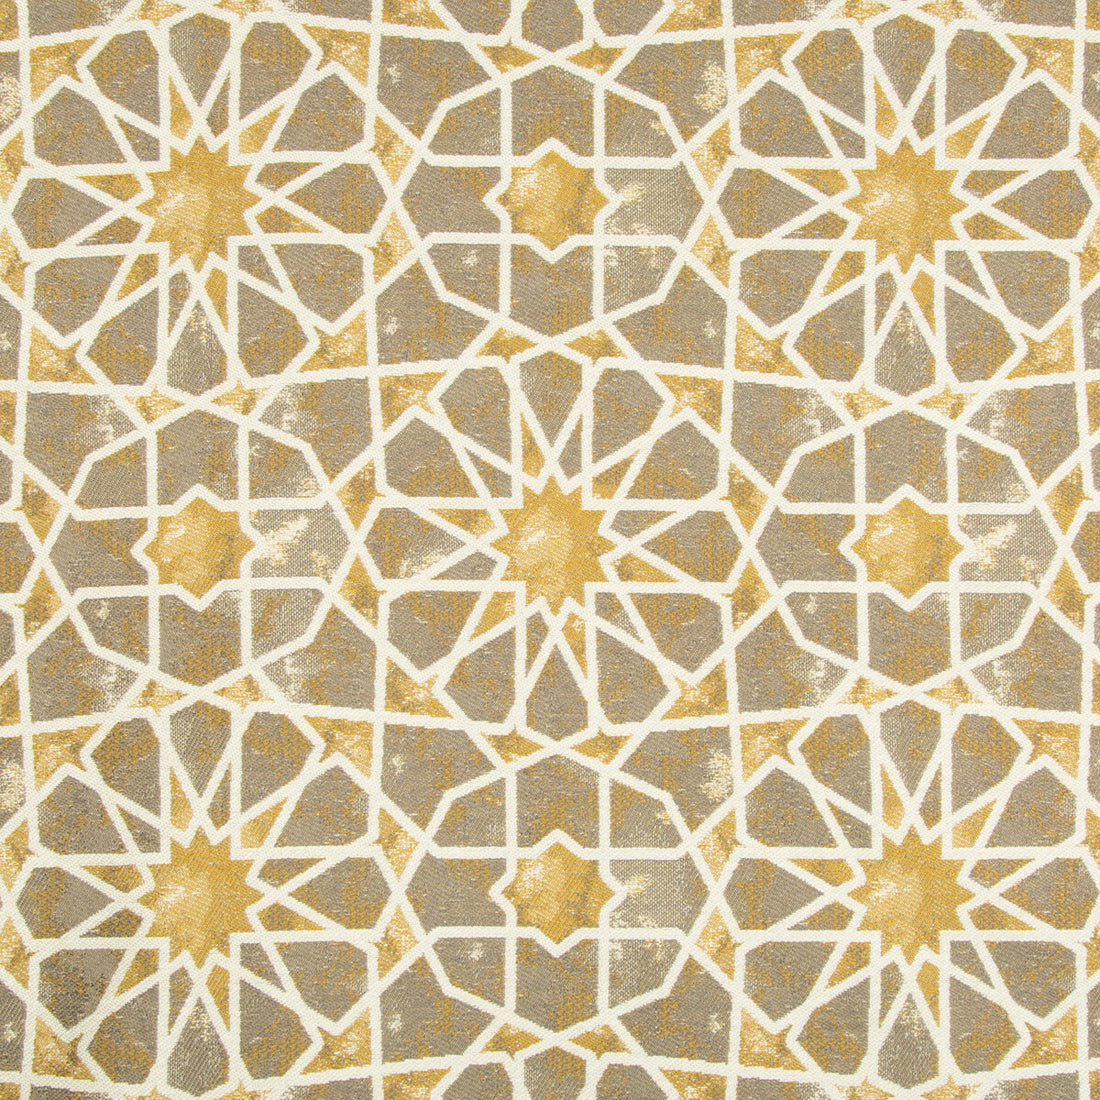 Kravet Design fabric in 34722-64 color - pattern 34722.64.0 - by Kravet Design in the Gis collection